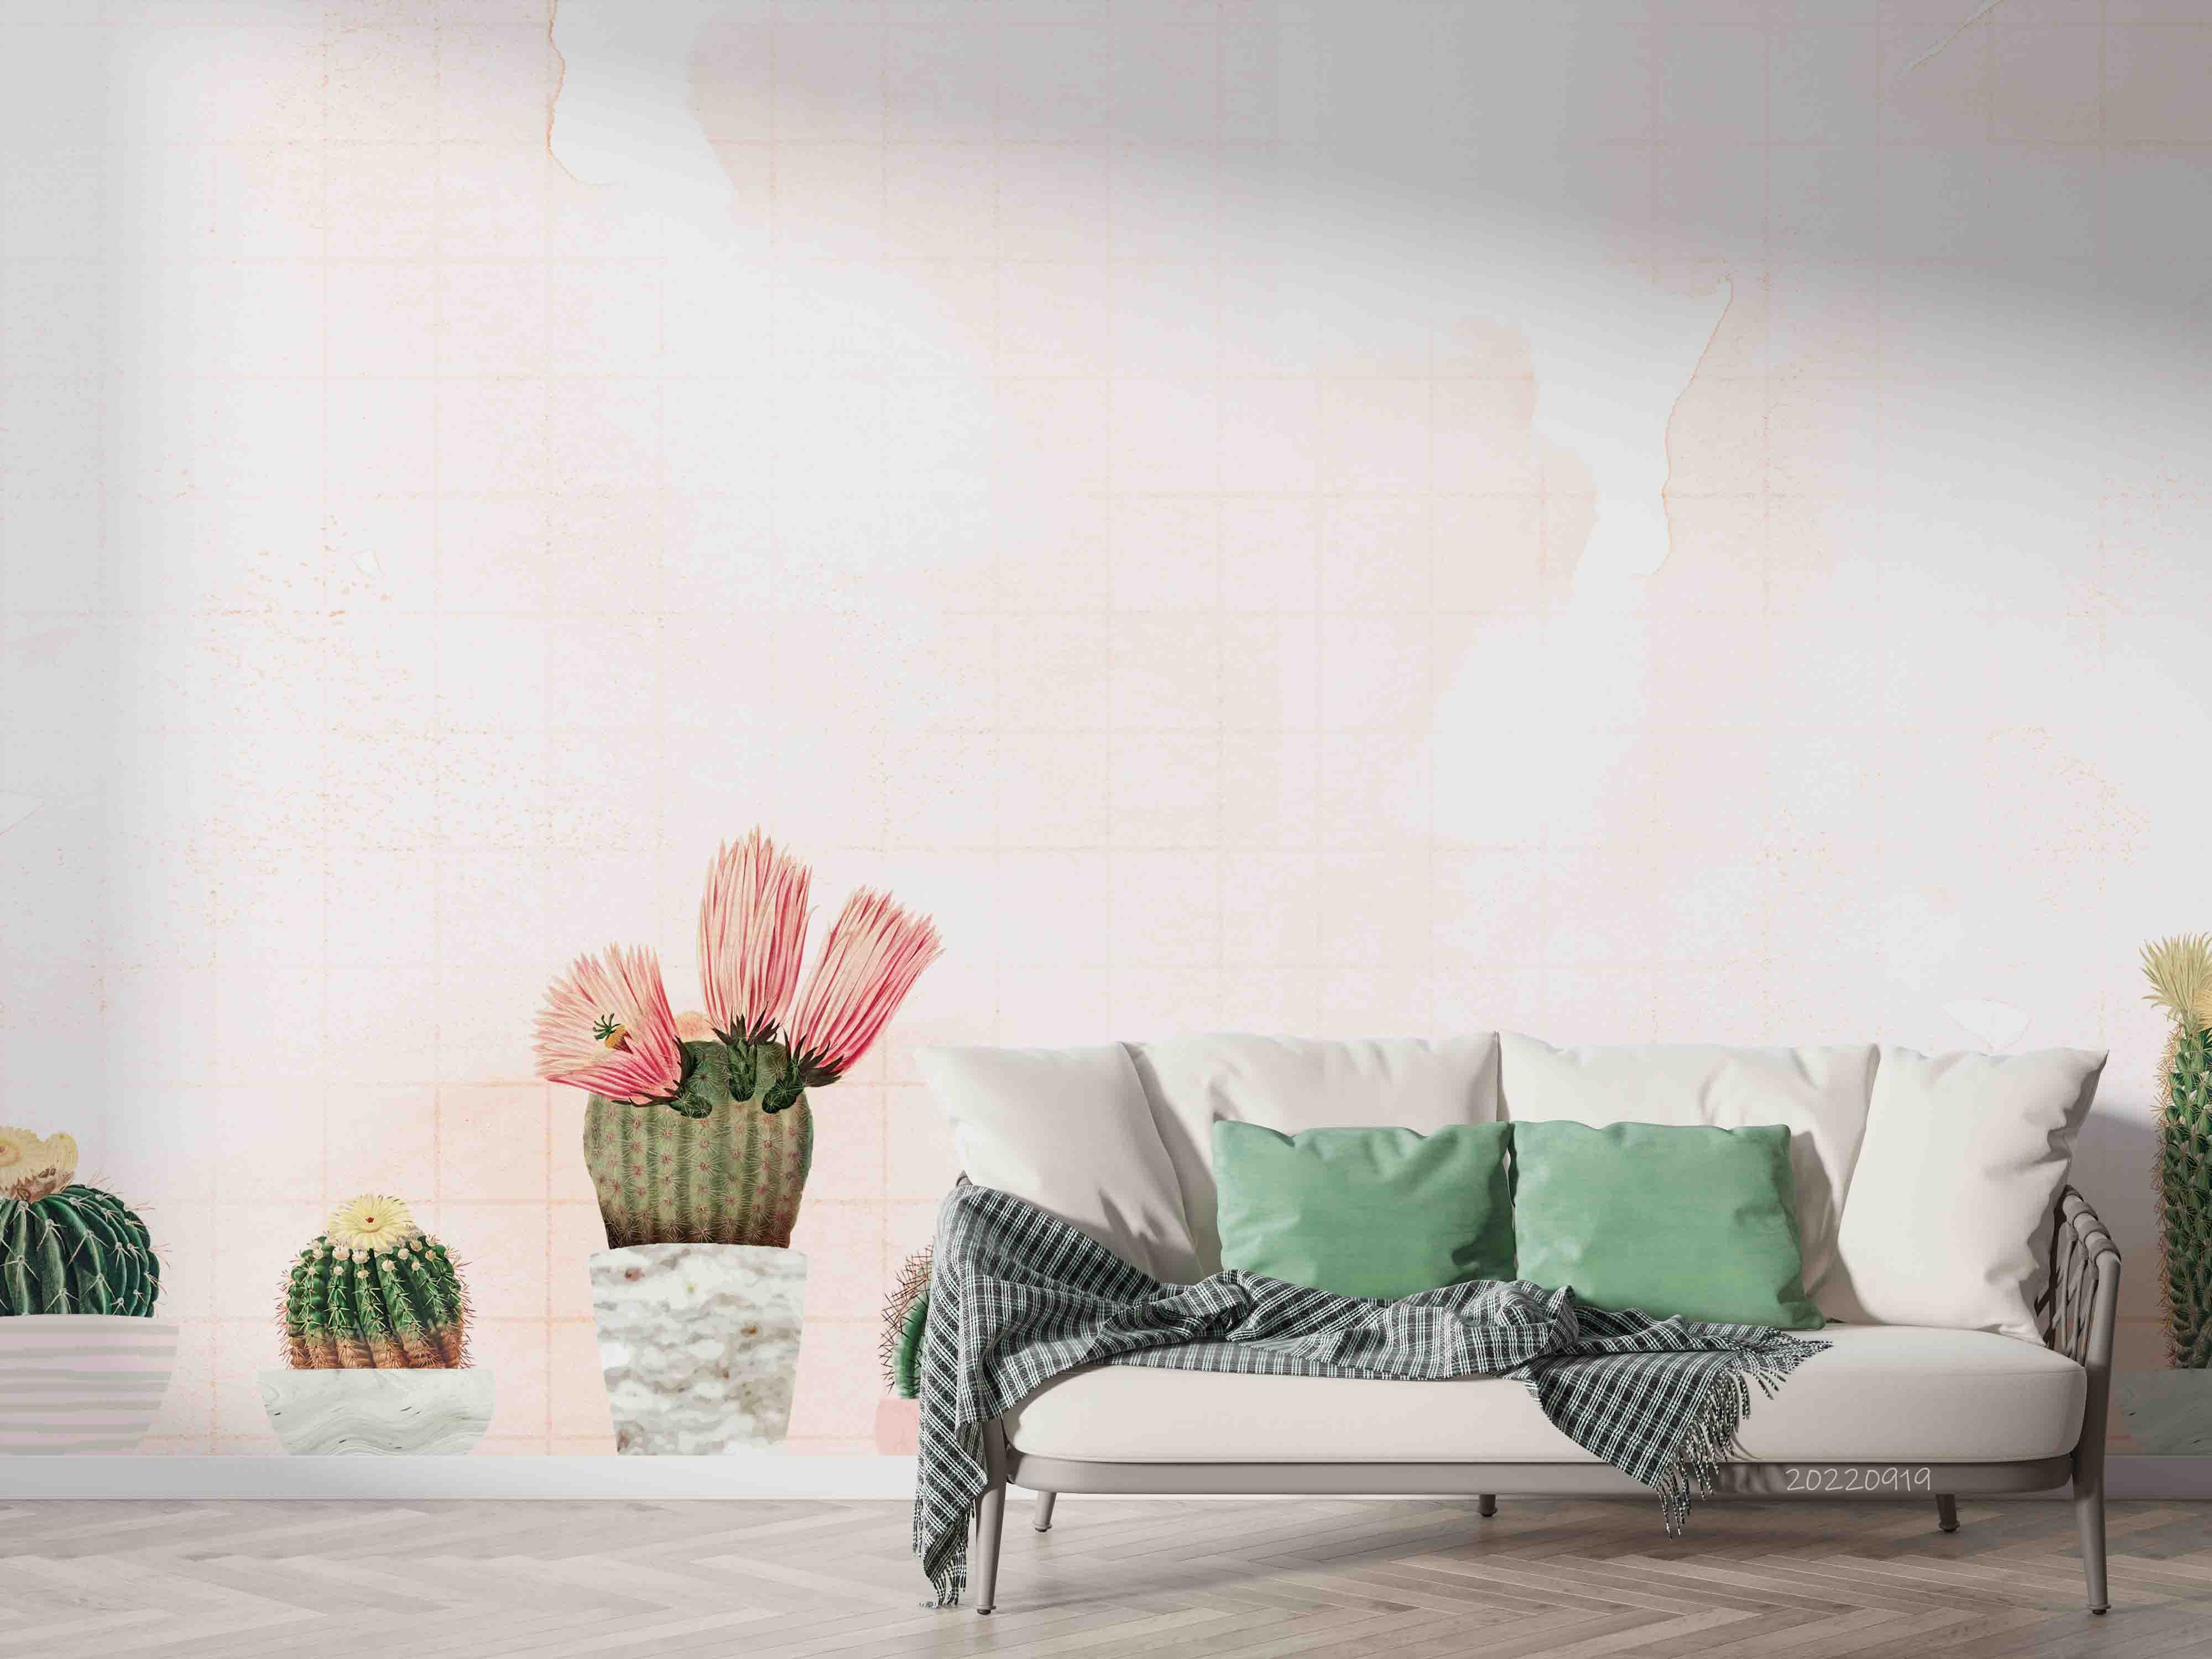 3D Vintage Green Cactus Floral Wall Mural Wallpaper GD 3417- Jess Art Decoration